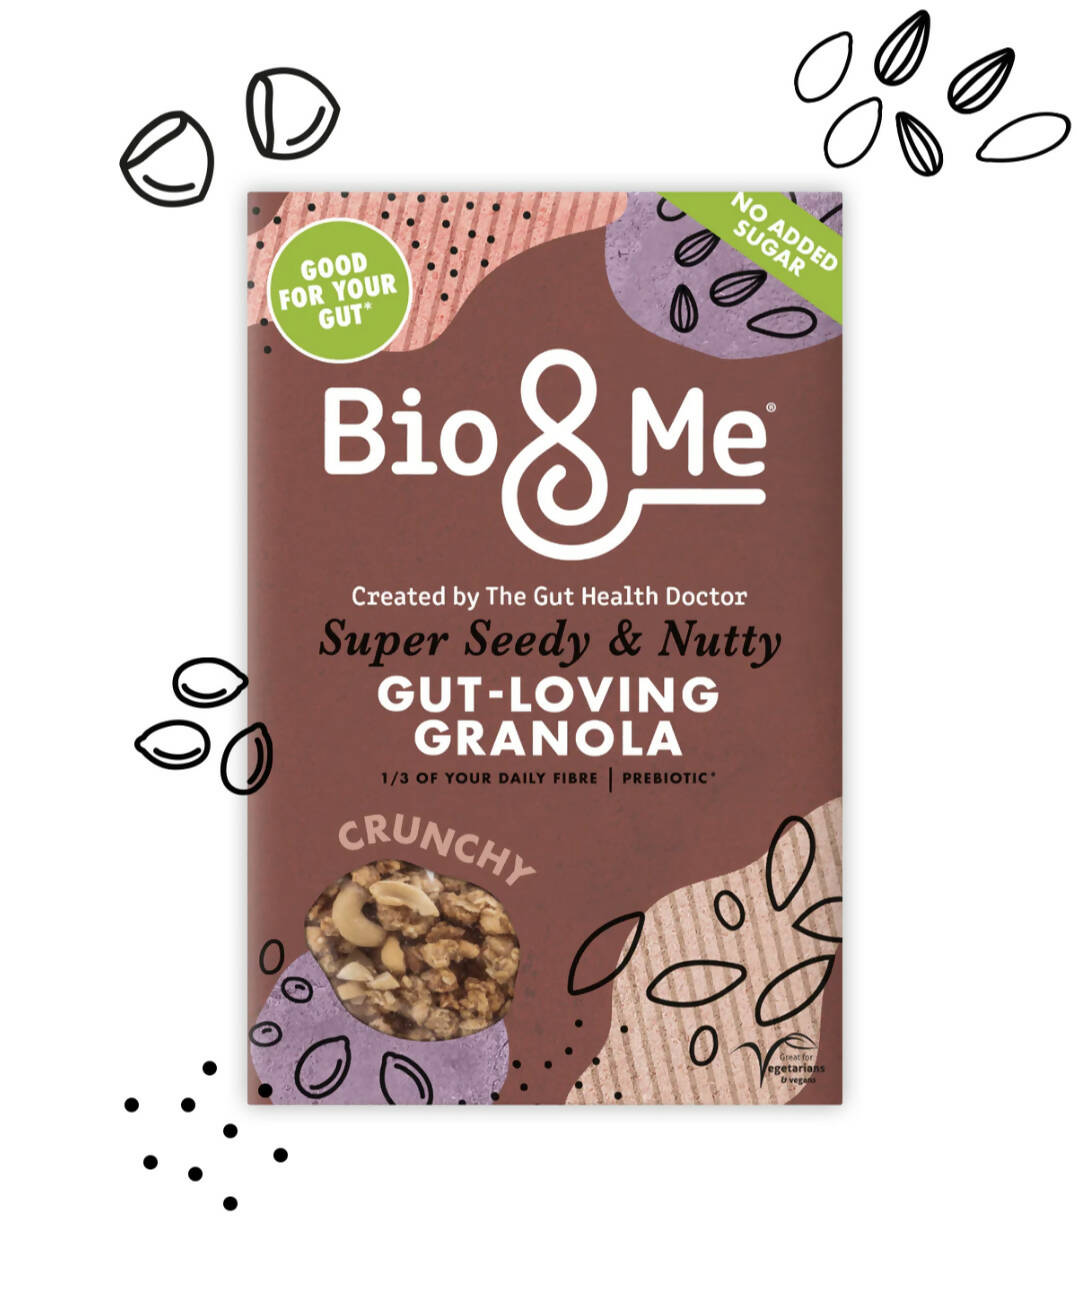 Super Seedy & Nutty Gut-Loving Prebiotic* Granola (6x360g)